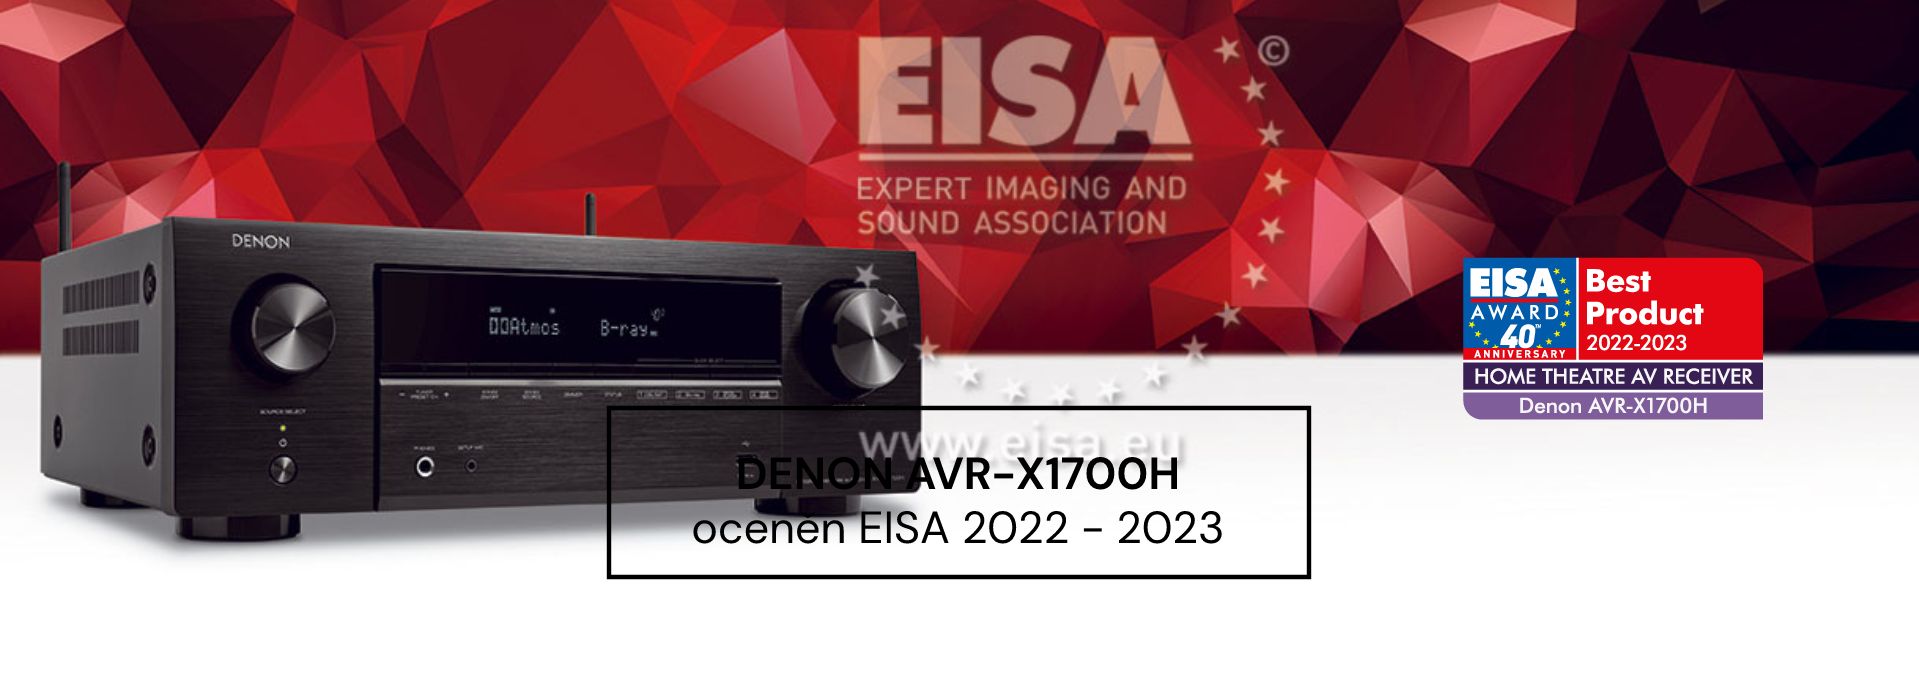 Denon AVR-X1700H - EISA